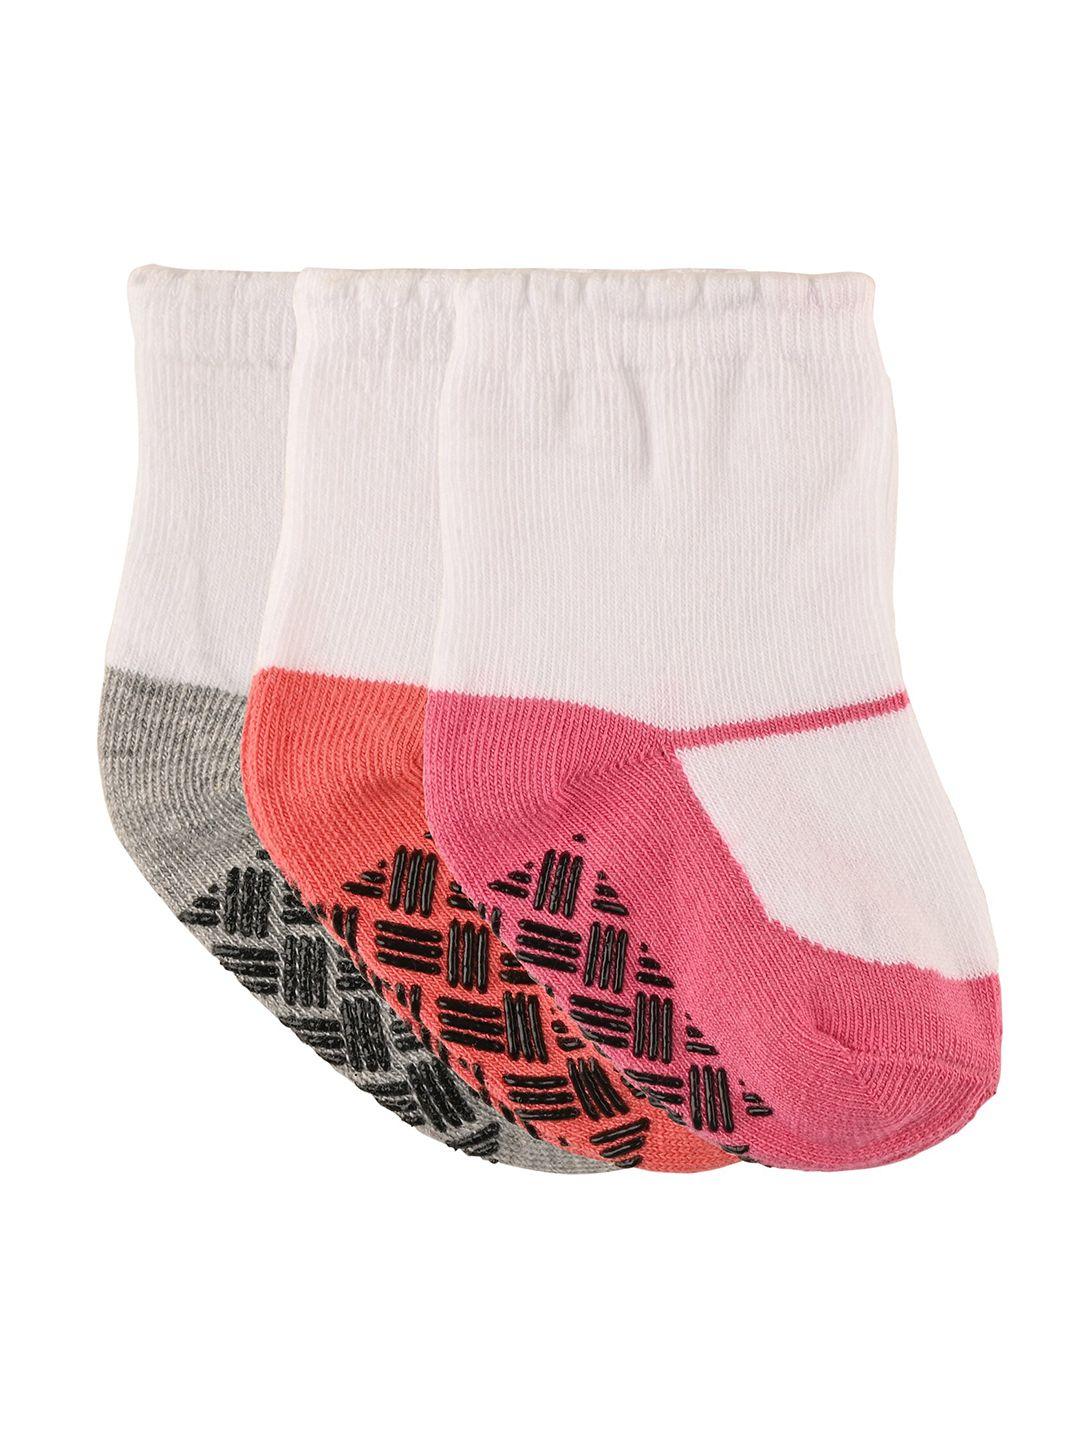 nuluv-girls-pack-of-3-patterned-ankle-length-cotton-socks